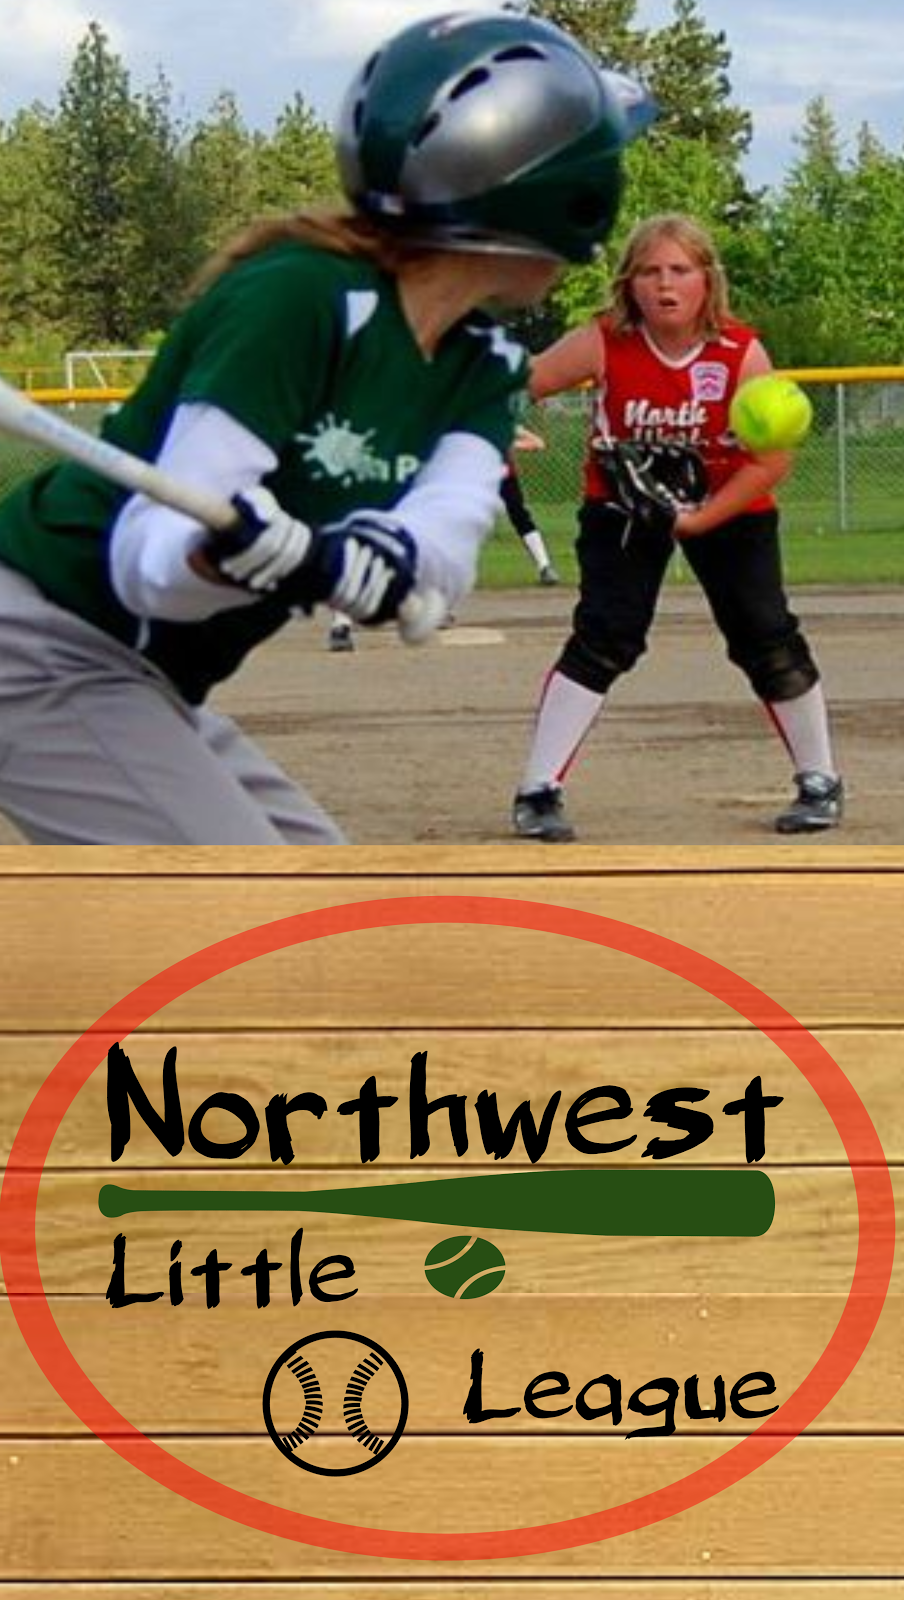 Northwest Little League